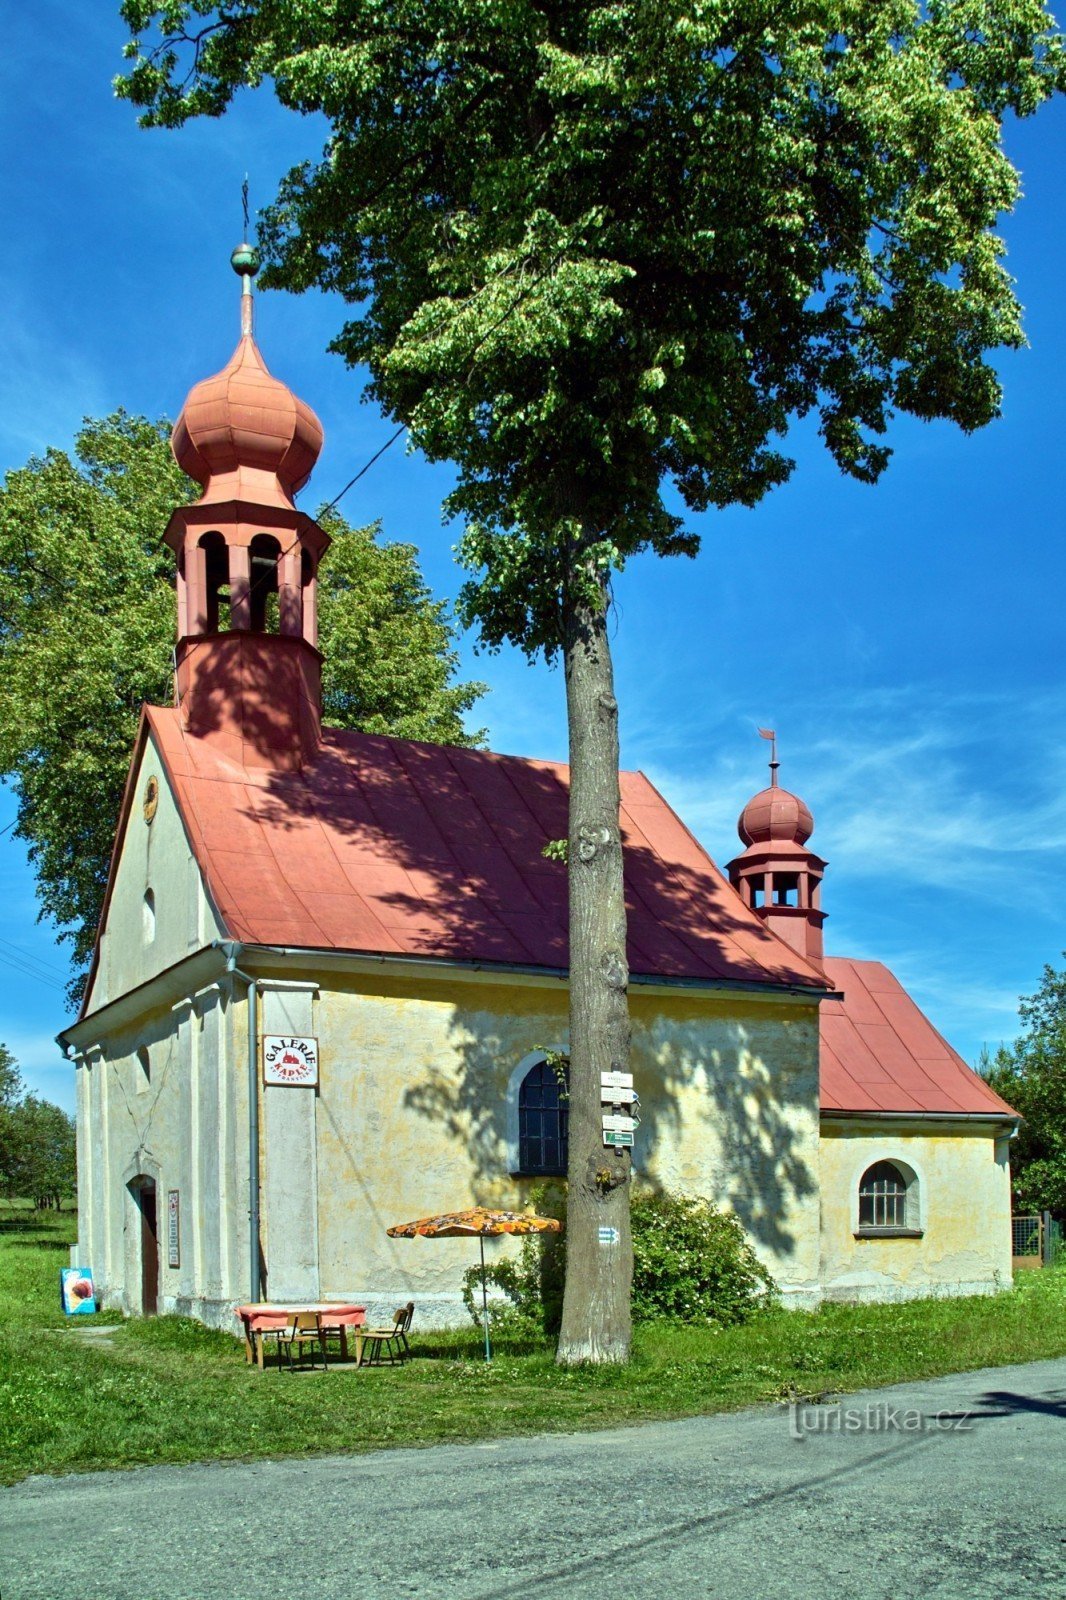 Křížov-capilla